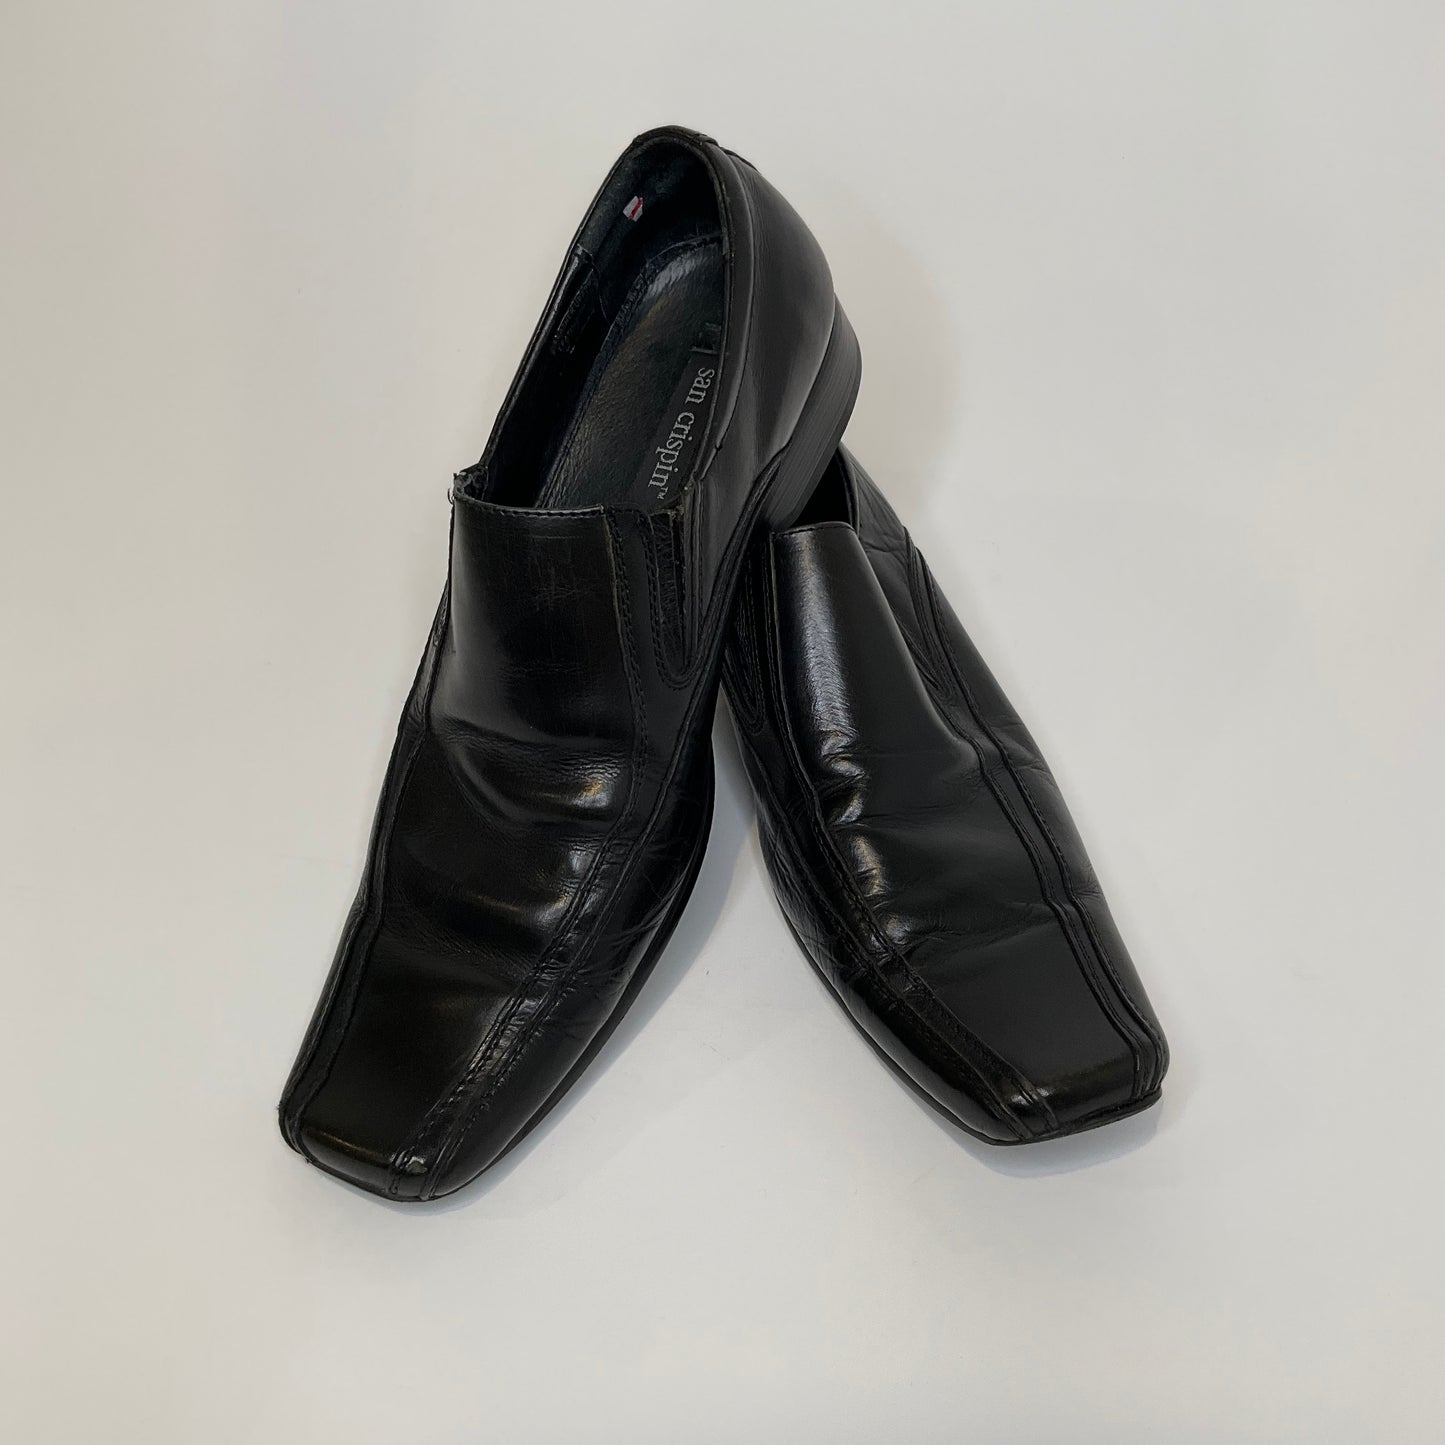 San Crispin - Shoes - Size 9